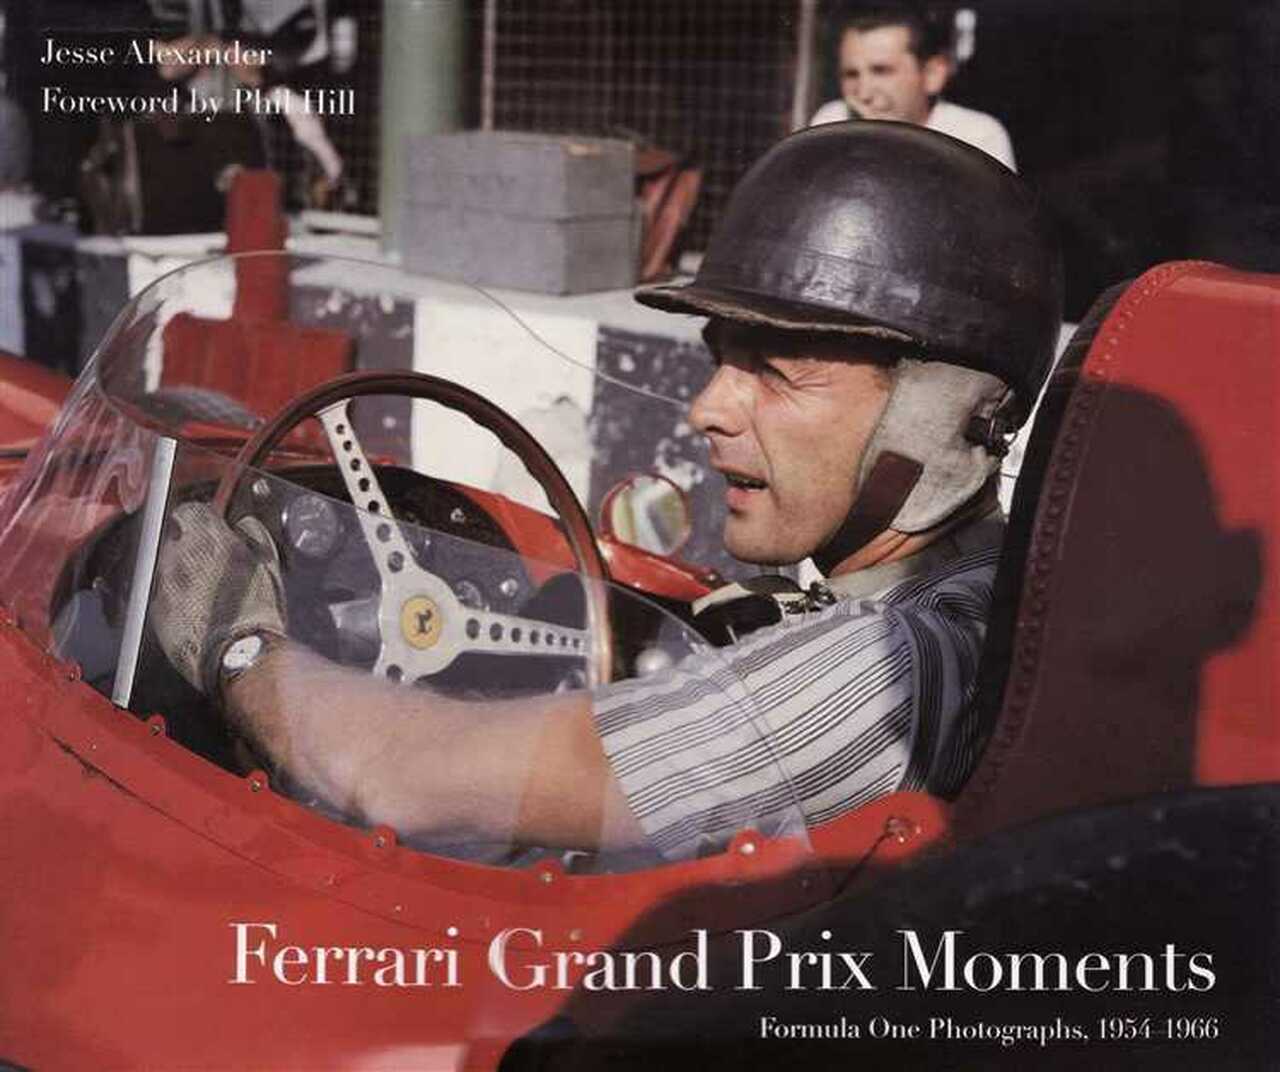 FERRARI GRAND PRIX MOMENTS FORMULA ONE PHOTOGRAPHS 1954-1966